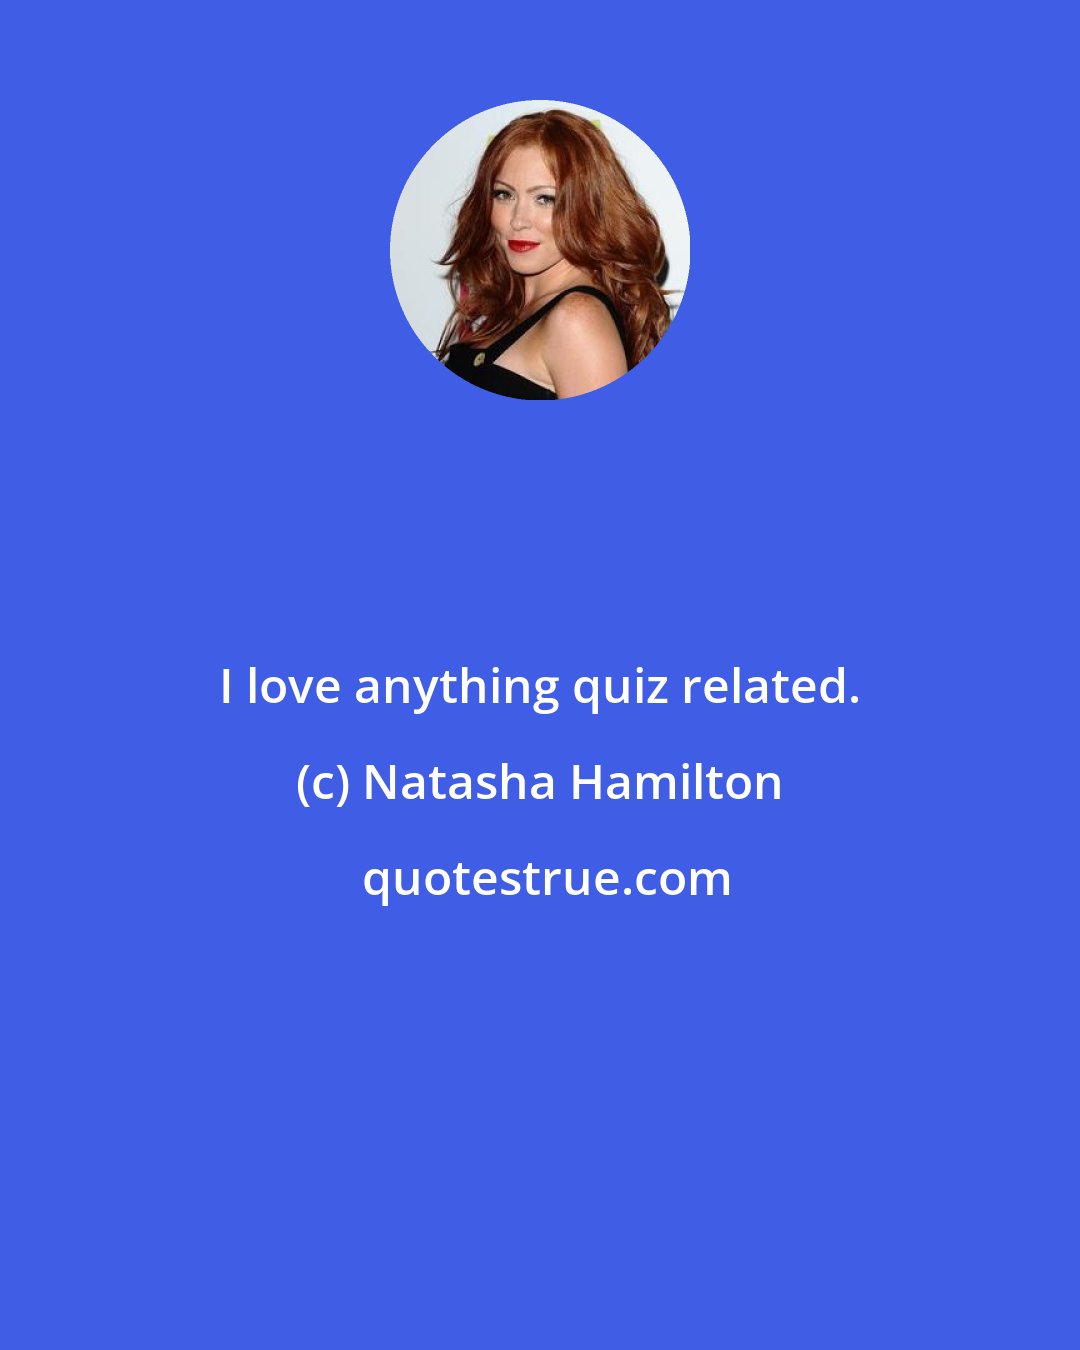 Natasha Hamilton: I love anything quiz related.